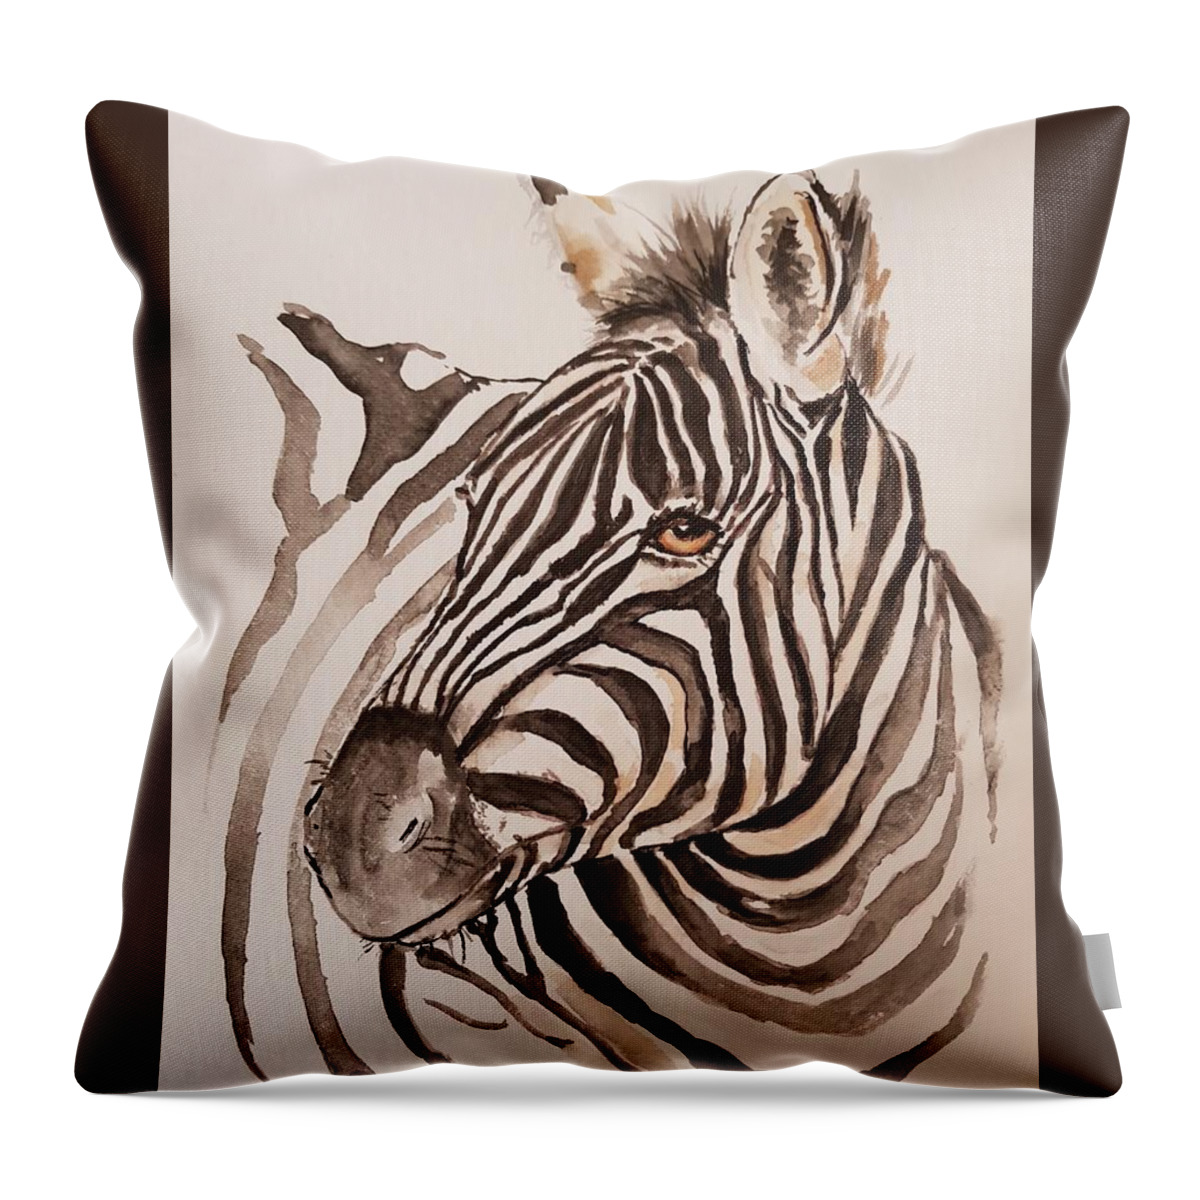 Zebra Throw Pillow featuring the painting Zebra by Ilona Petzer